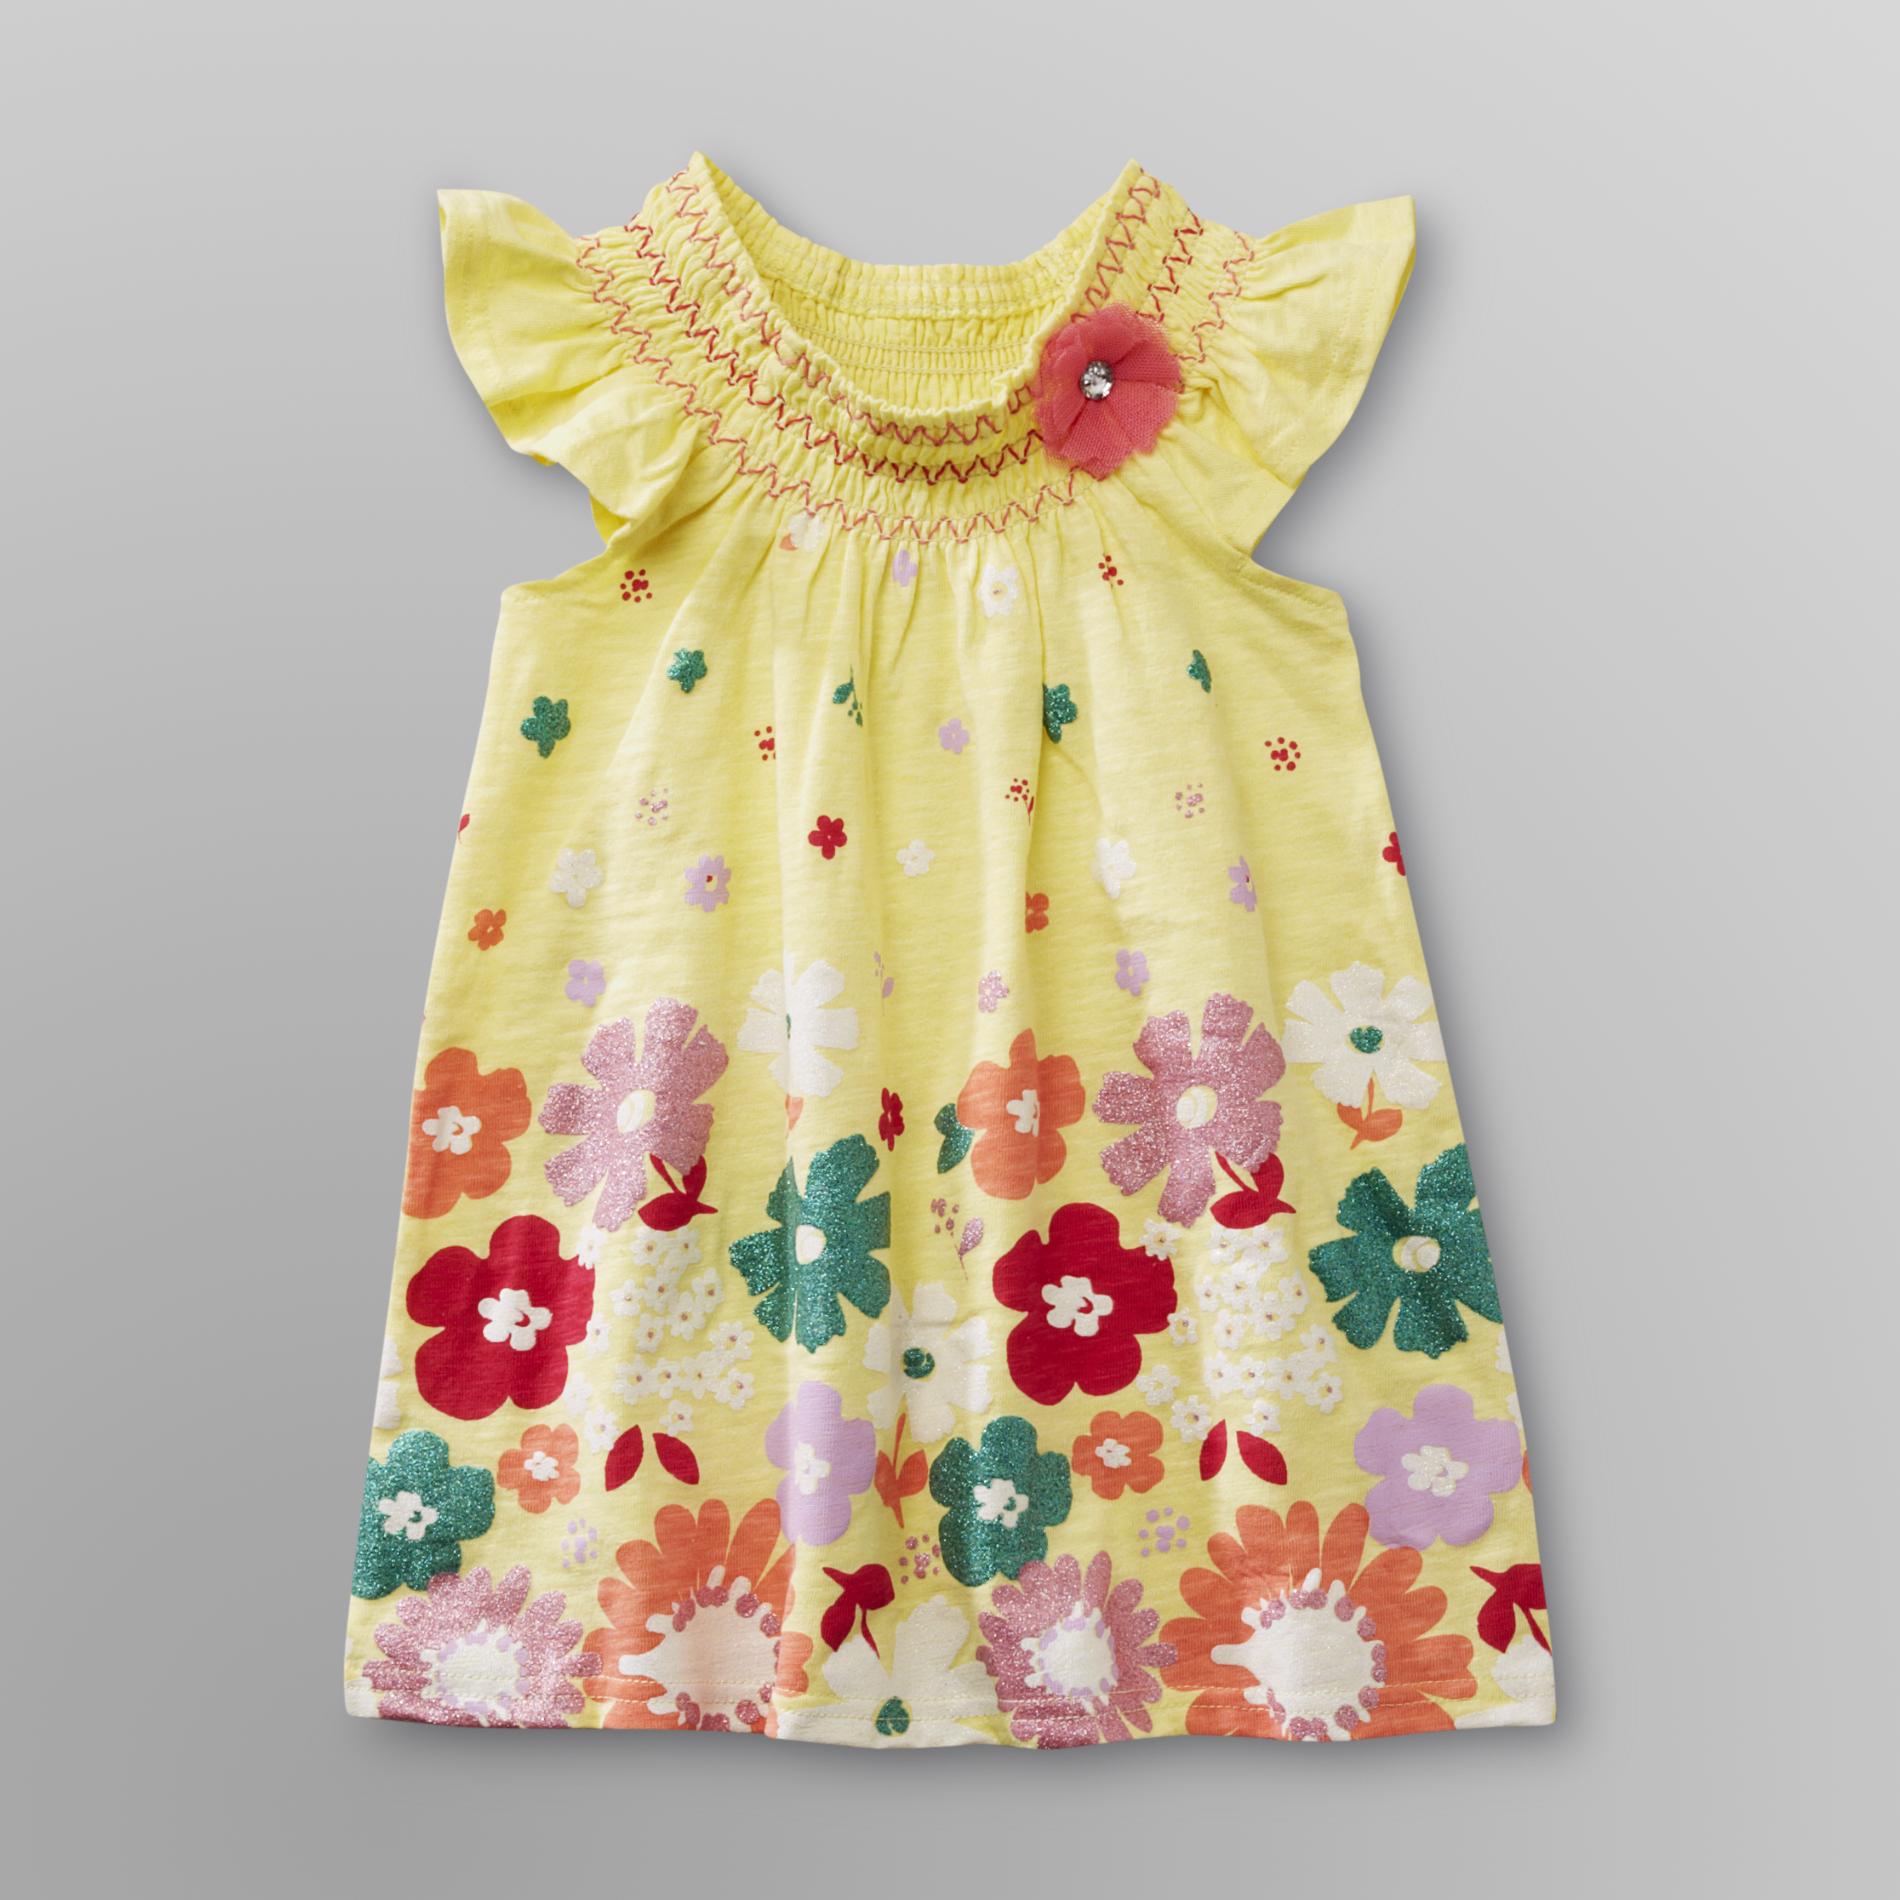 WonderKids Infant & Toddler Girl's Smocked Tunic Top - Floral